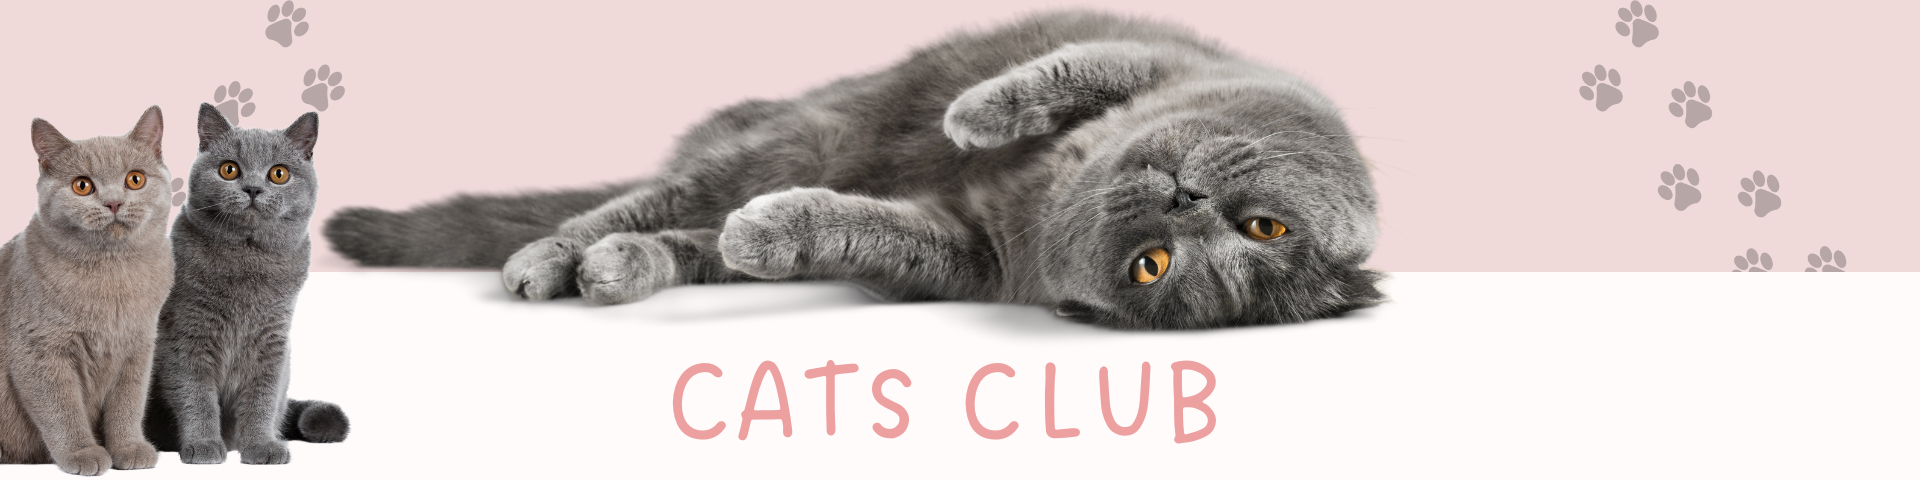 Cats Club